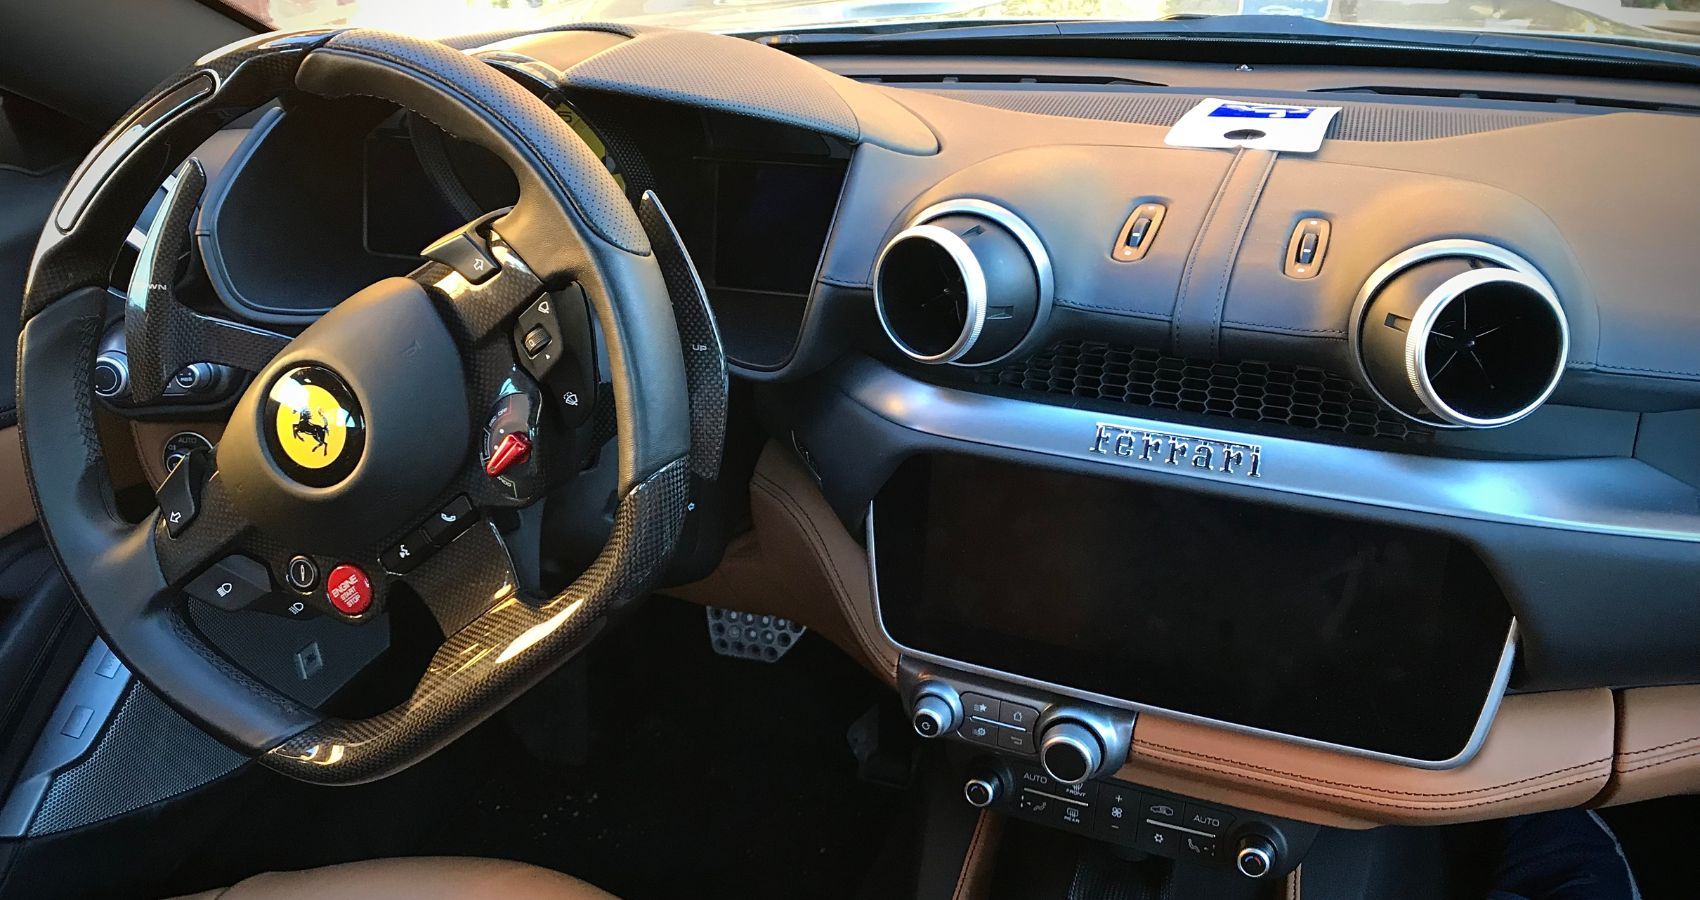 2020 Ferrari Portofino steering wheel and infotainment display 